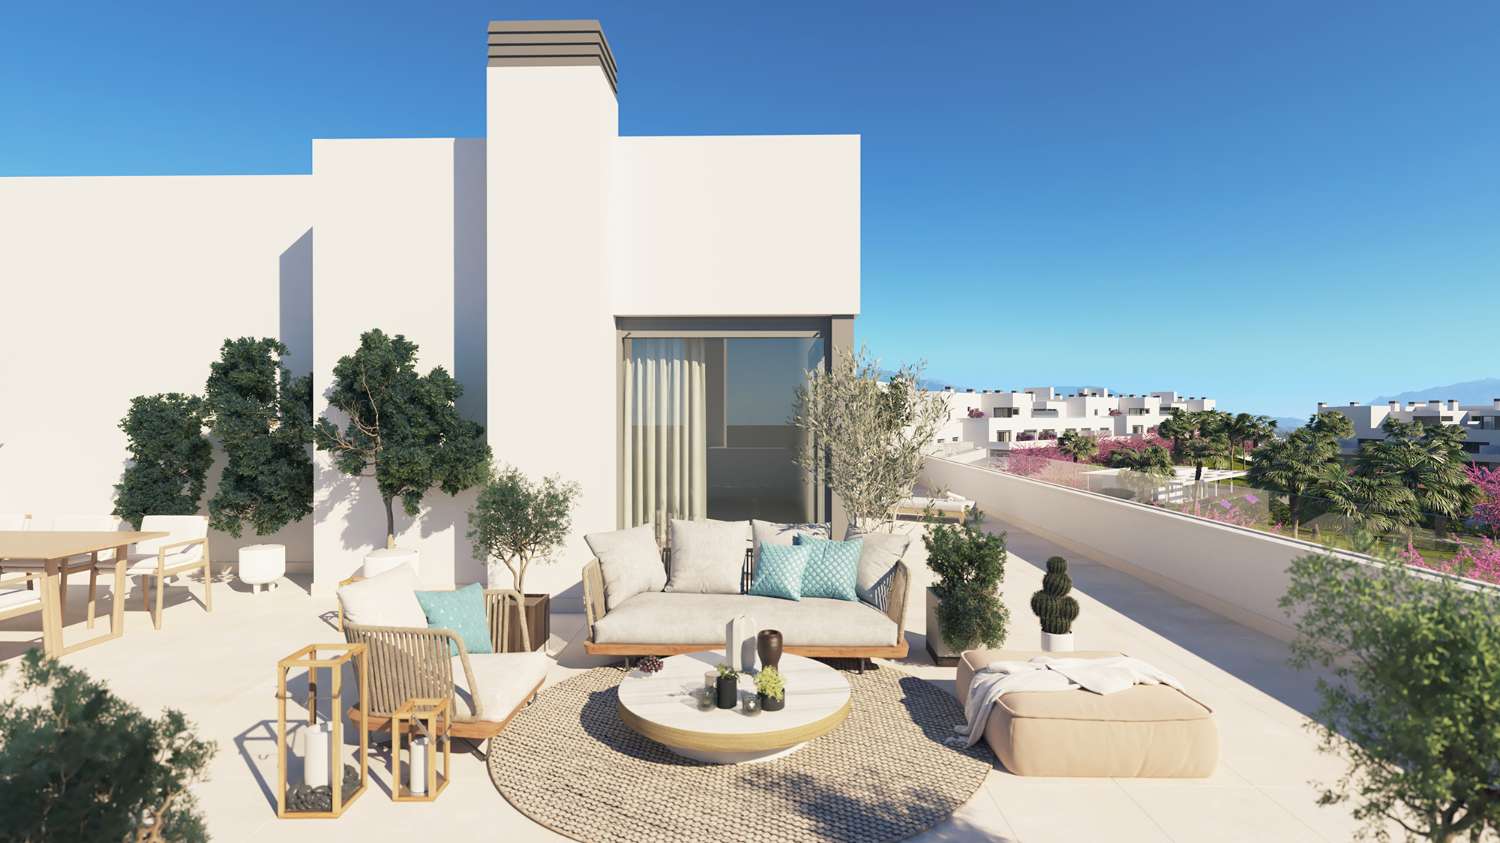 New apartment development in Estepona - Costa del Sol